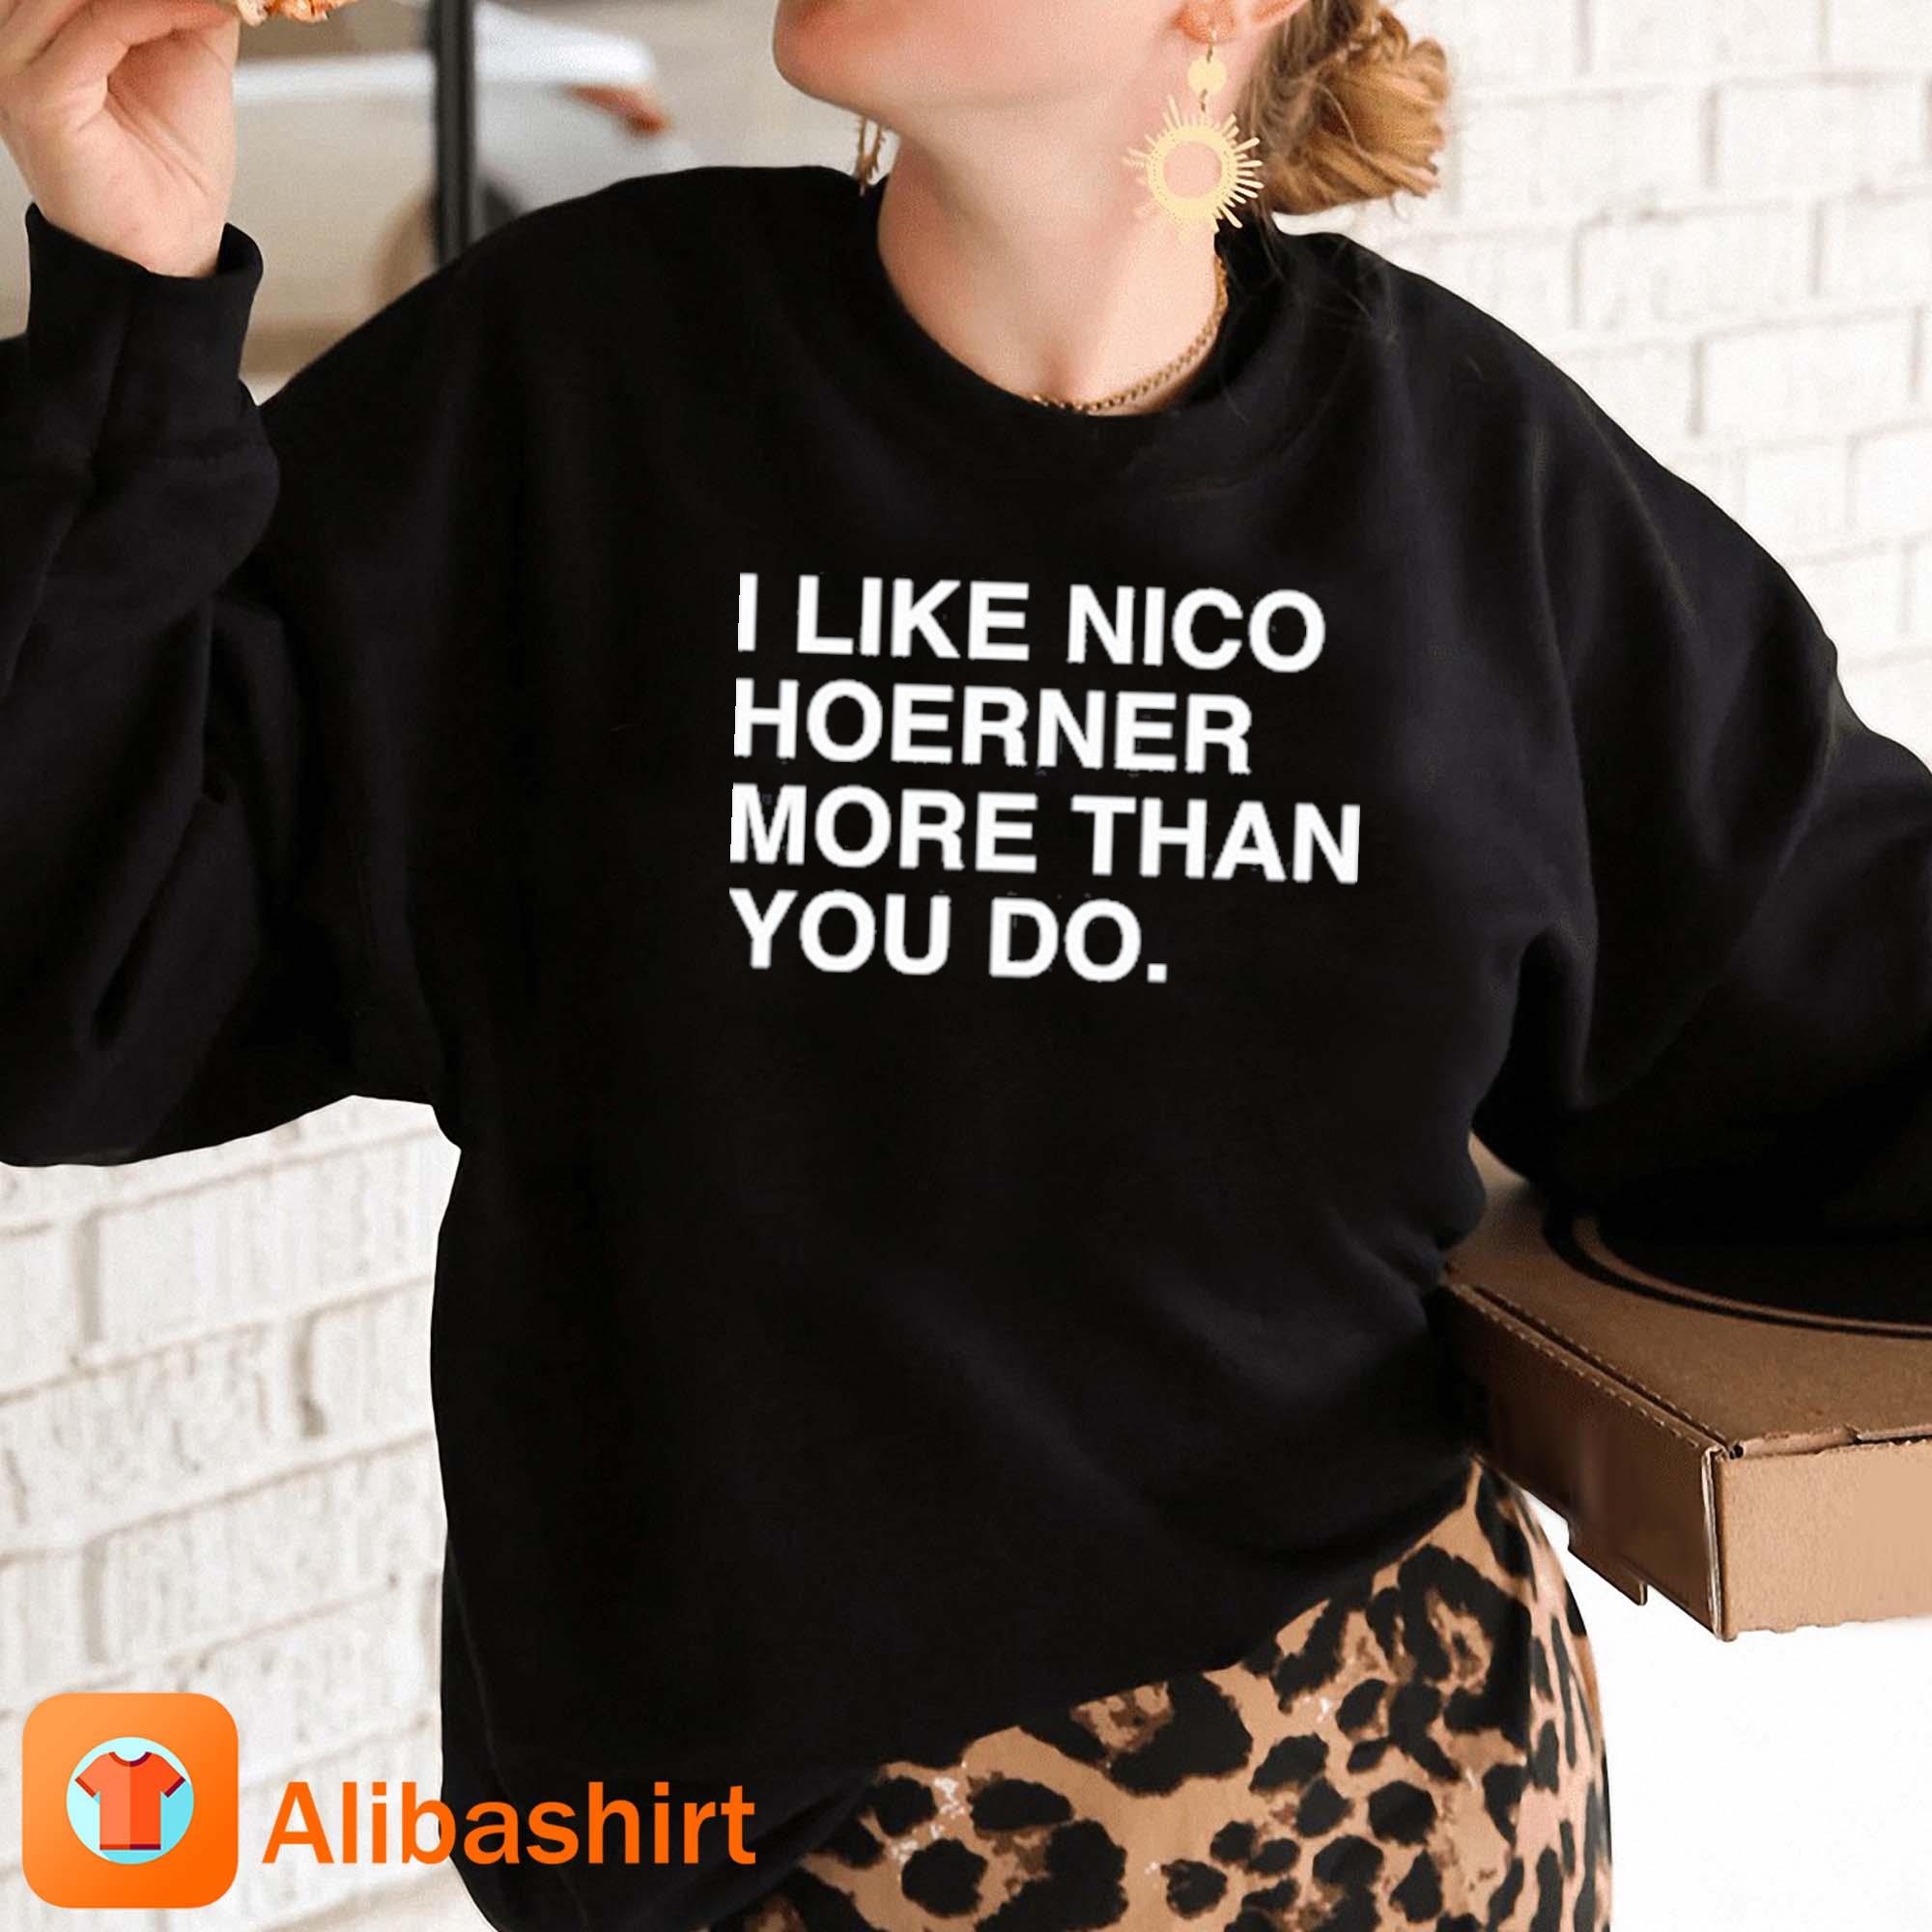 I like nico hoerner more than you do shirt, hoodie, sweatshirt and